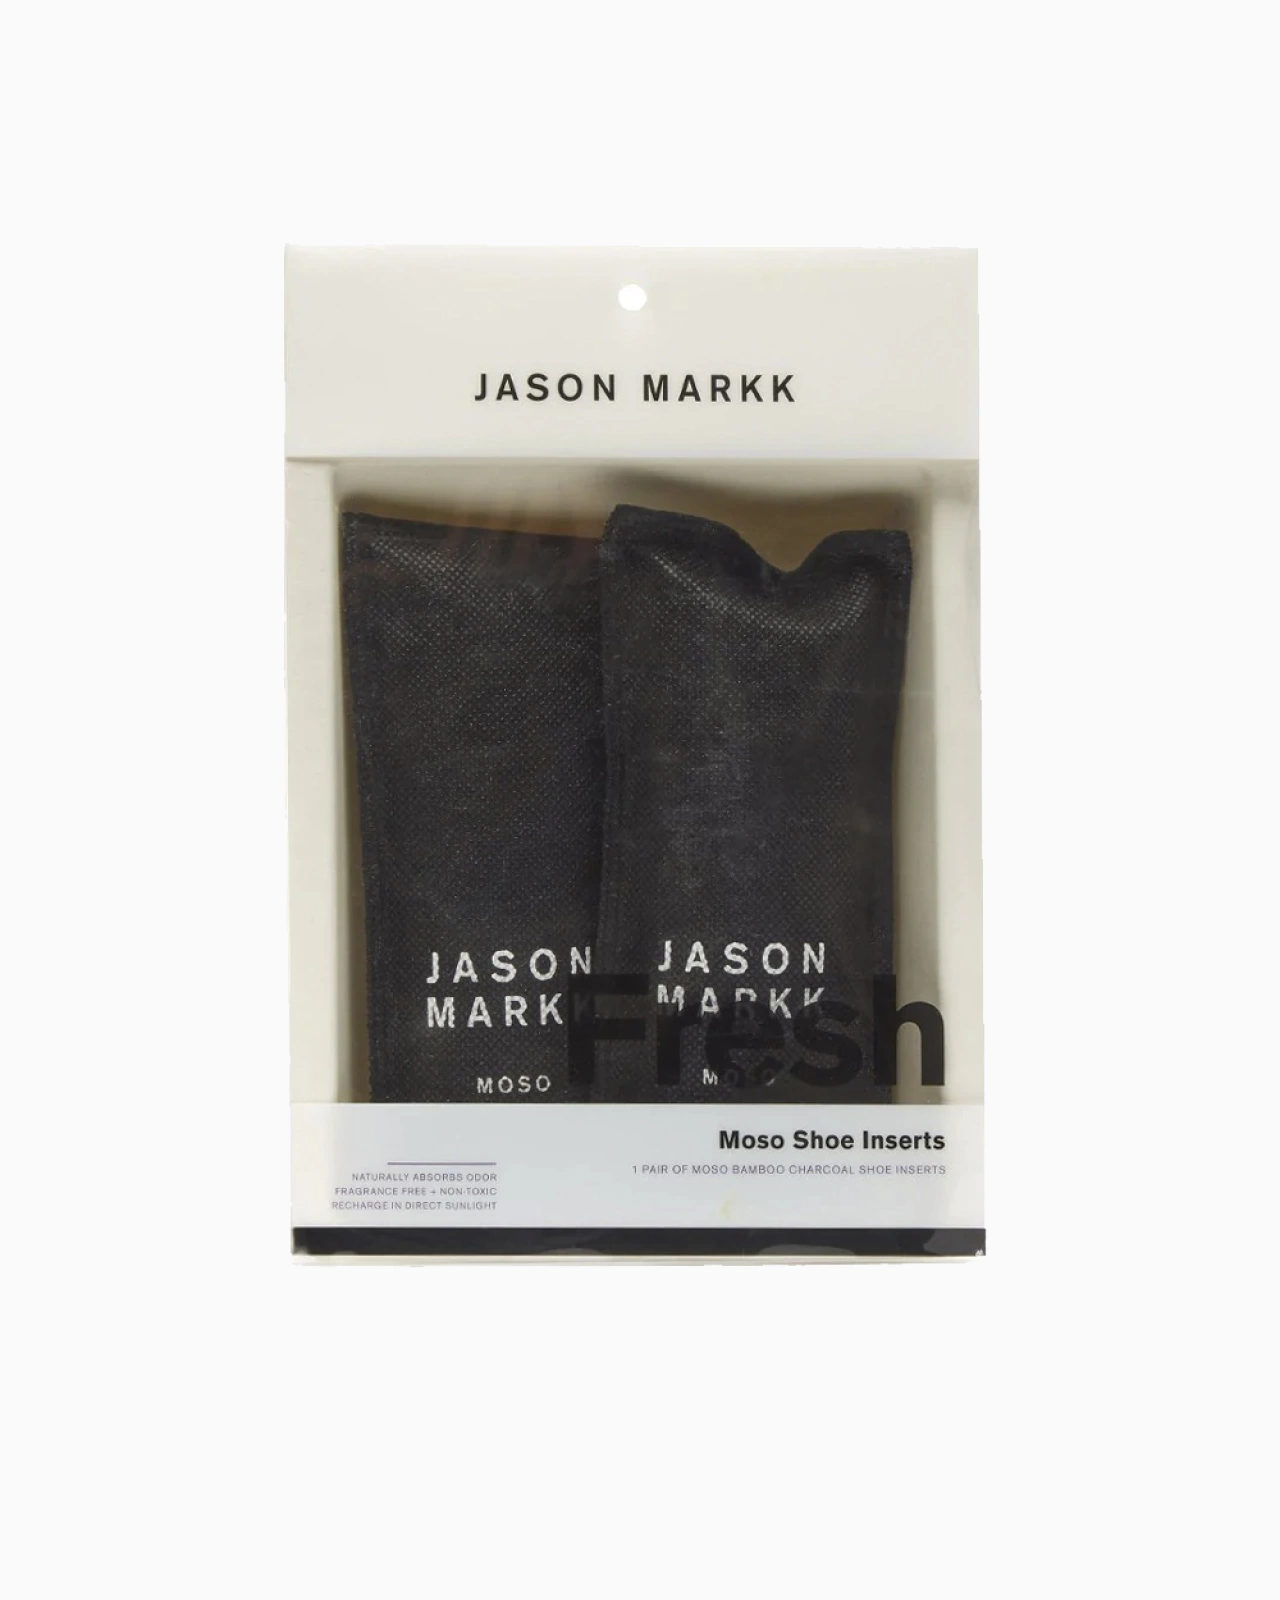 Jason Markk: Дезодорант для обуви Jasonn Markk Moso Shoe Inserts 